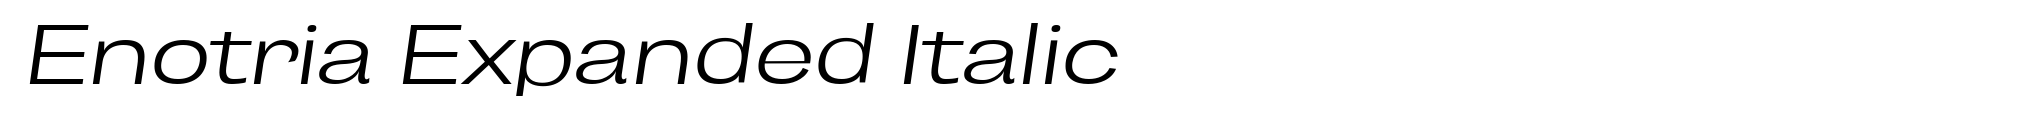 Enotria Expanded Italic image